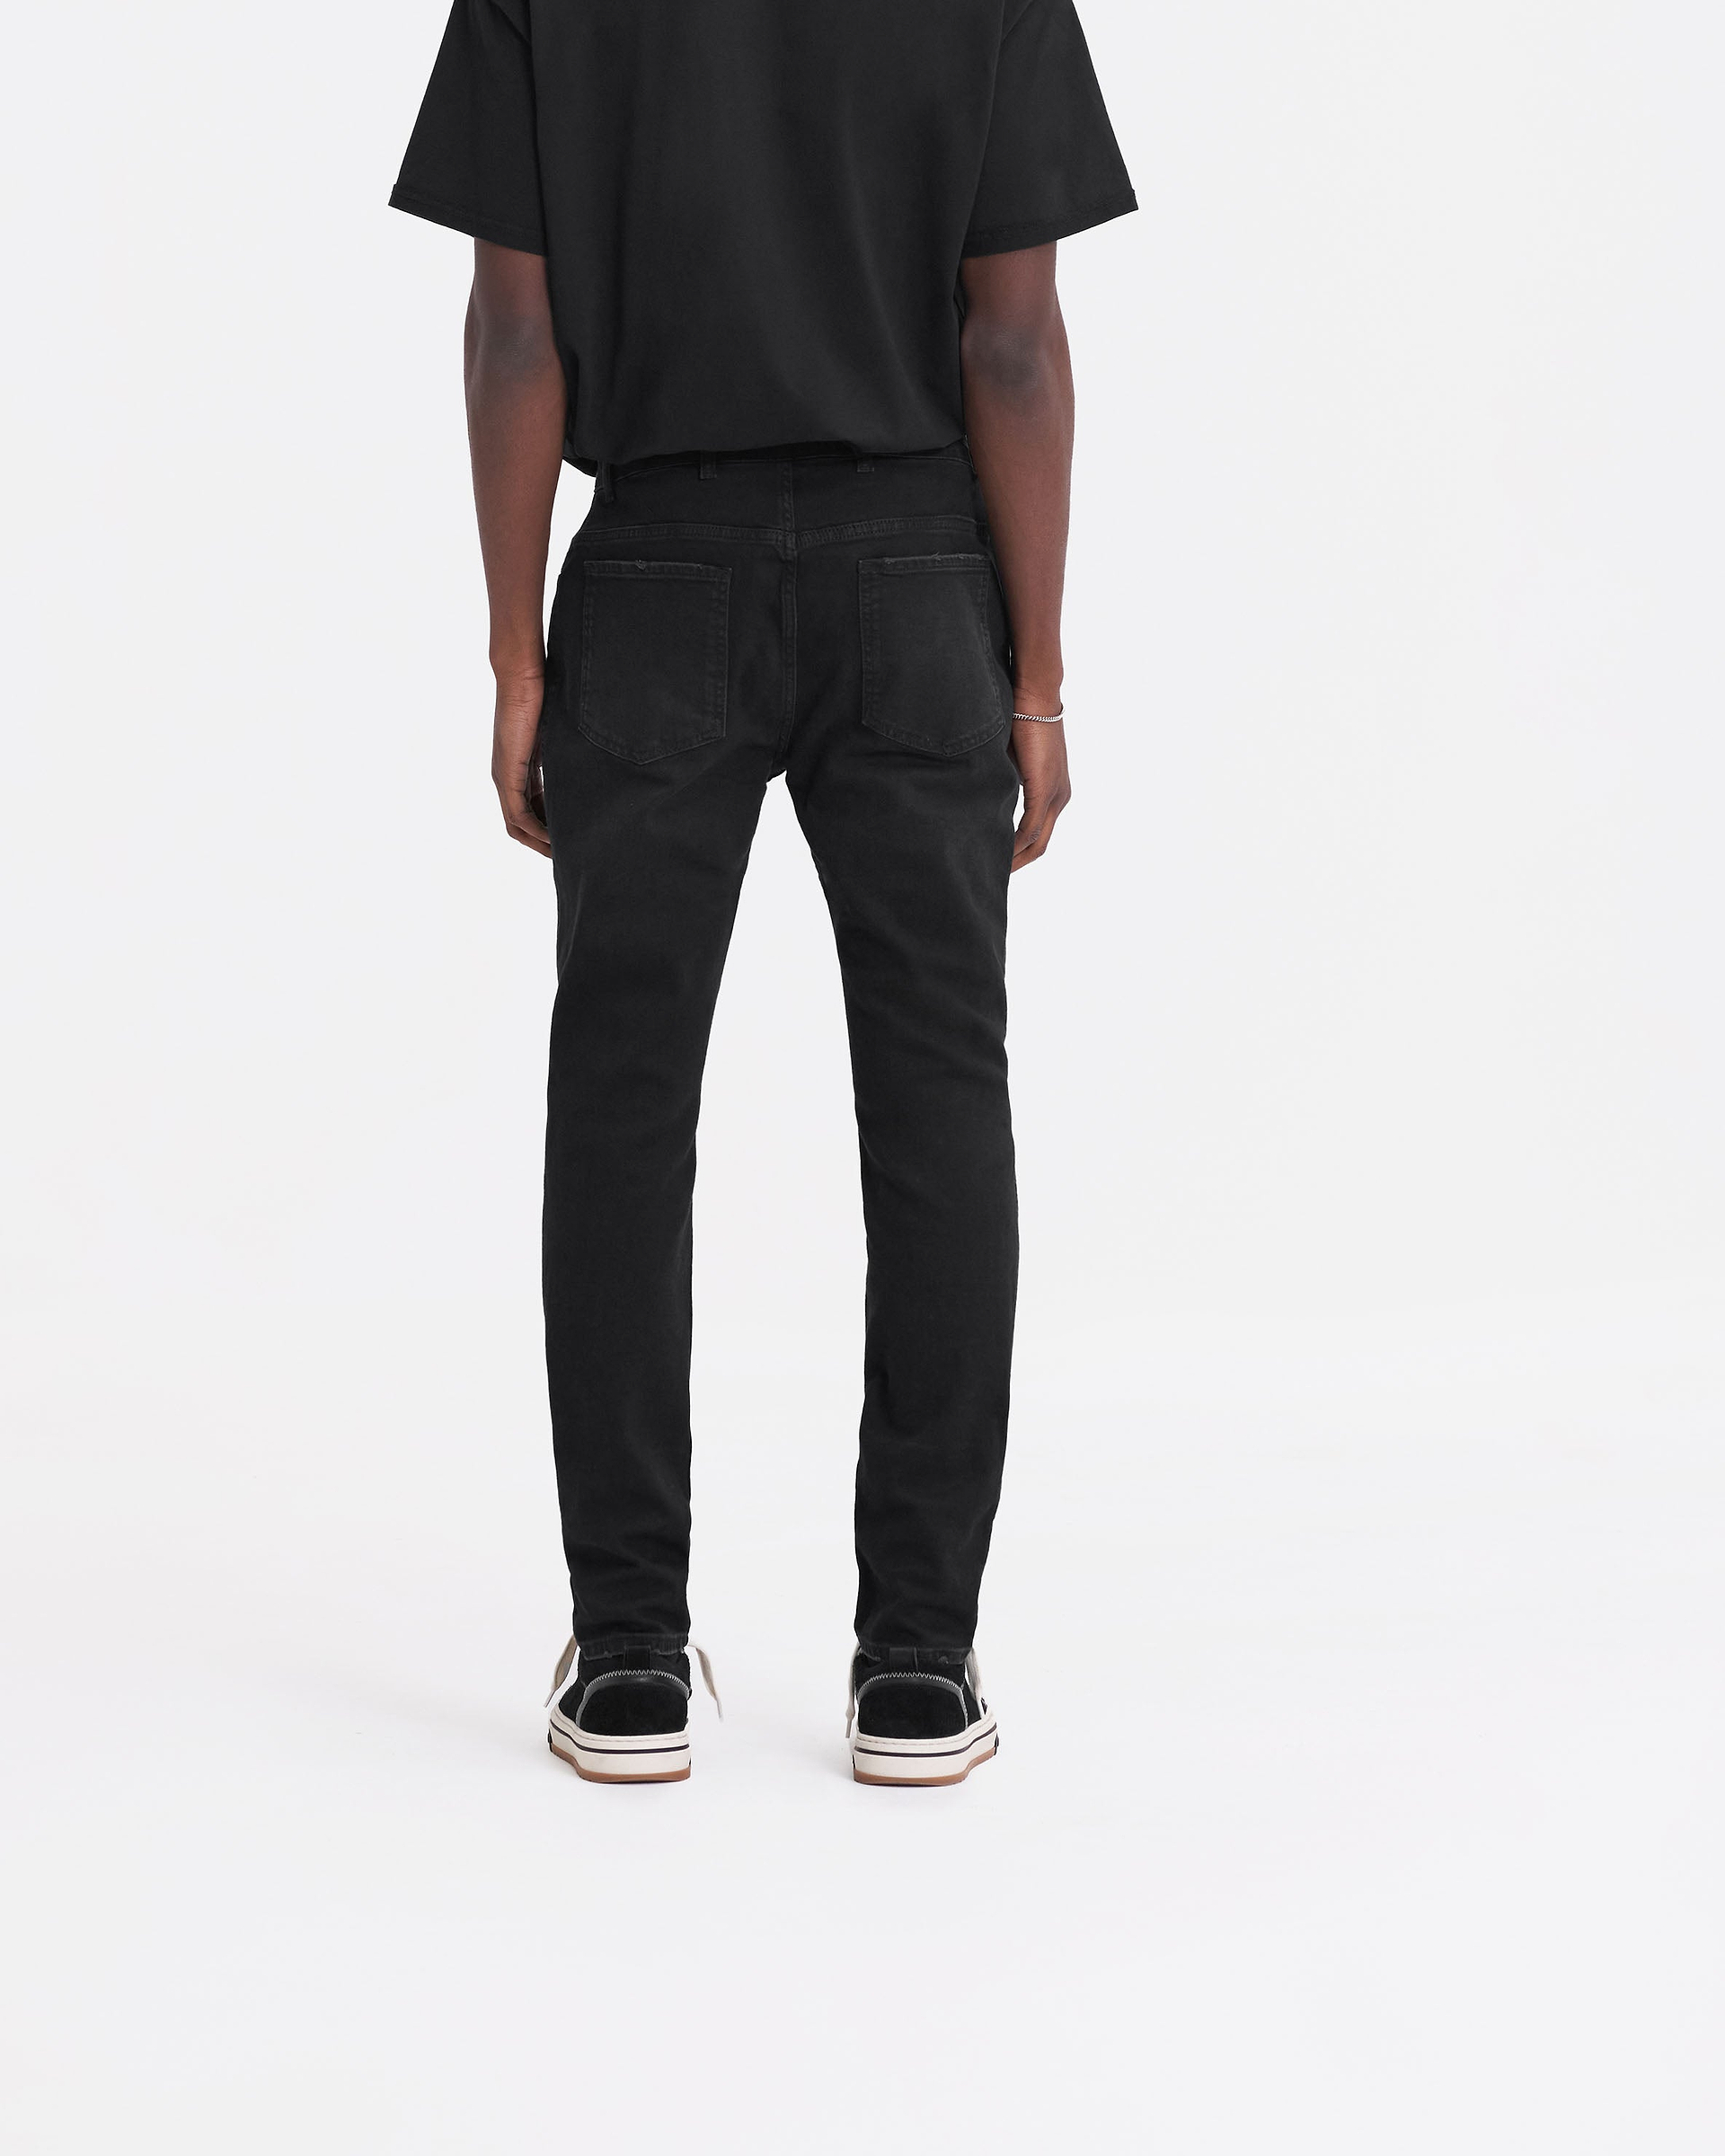 Black Ripped Jeans | R1D | REPRESENT CLO